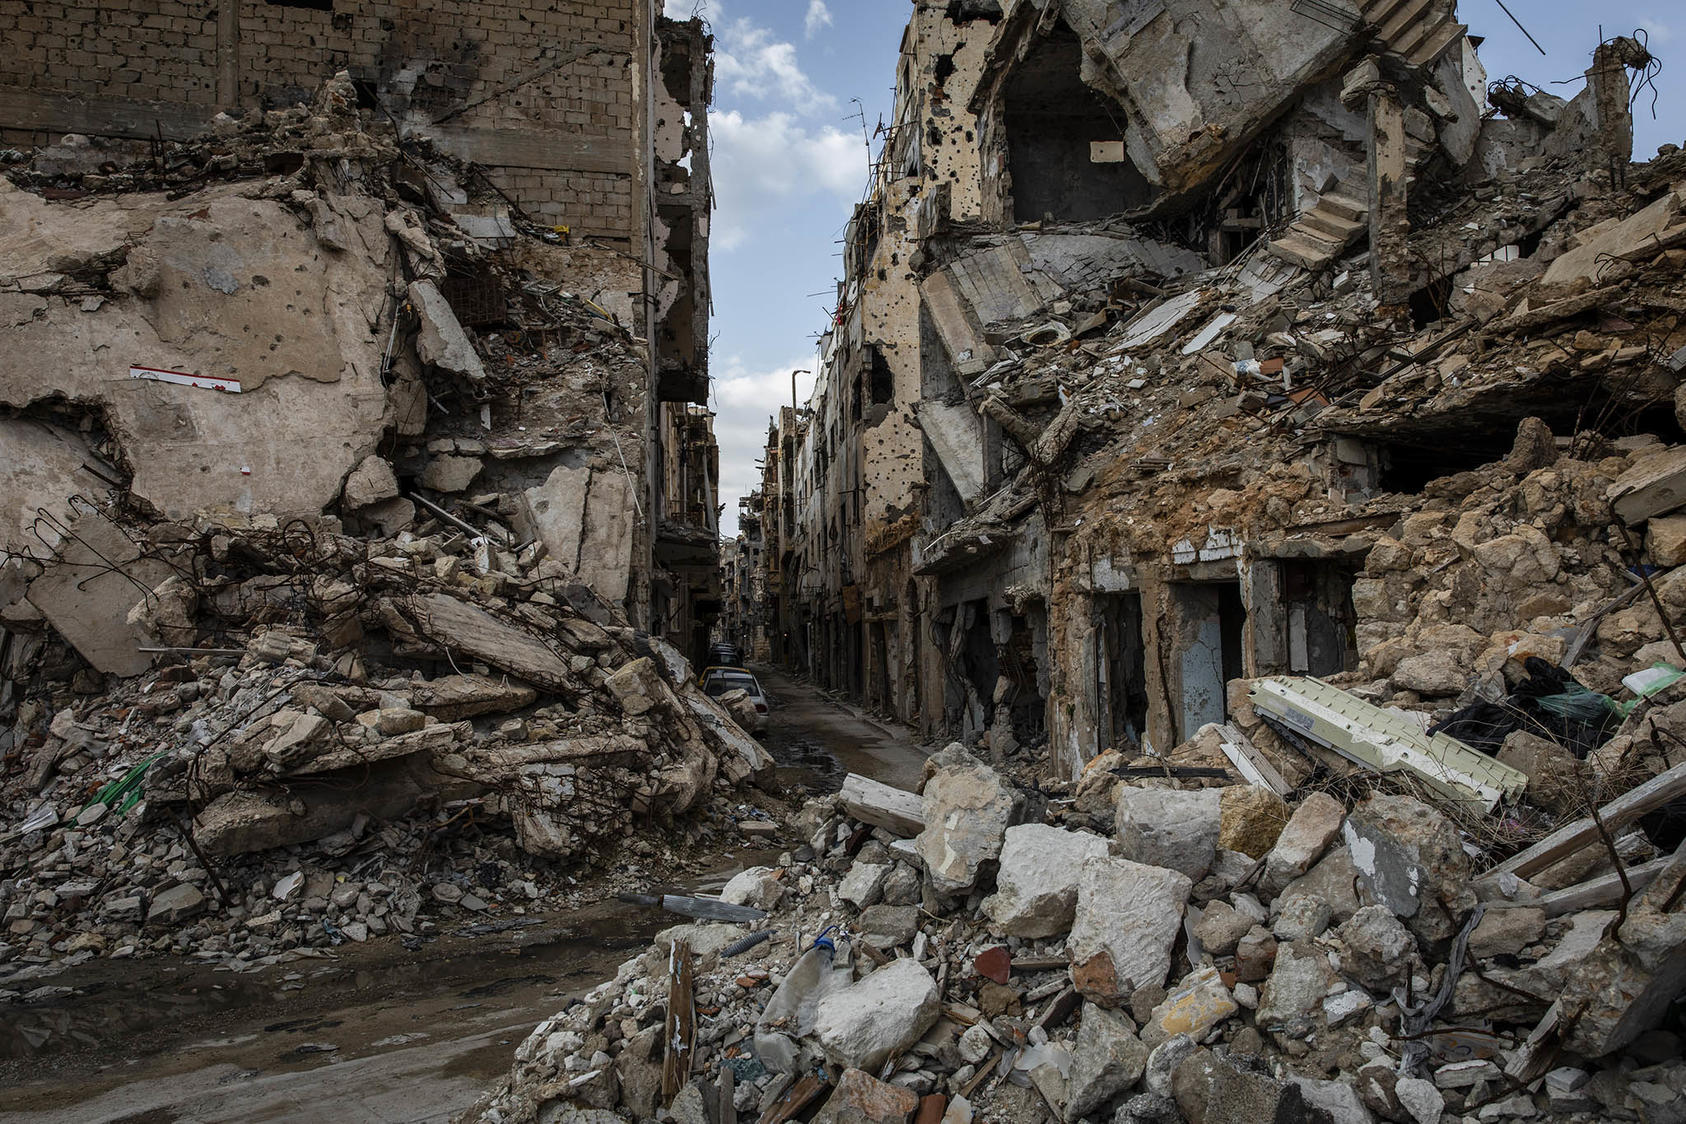 Ruined buildings in the historic center of Benghazi, Libya, Jan. 20, 2020. (Ivor Prickett/The New York Times)